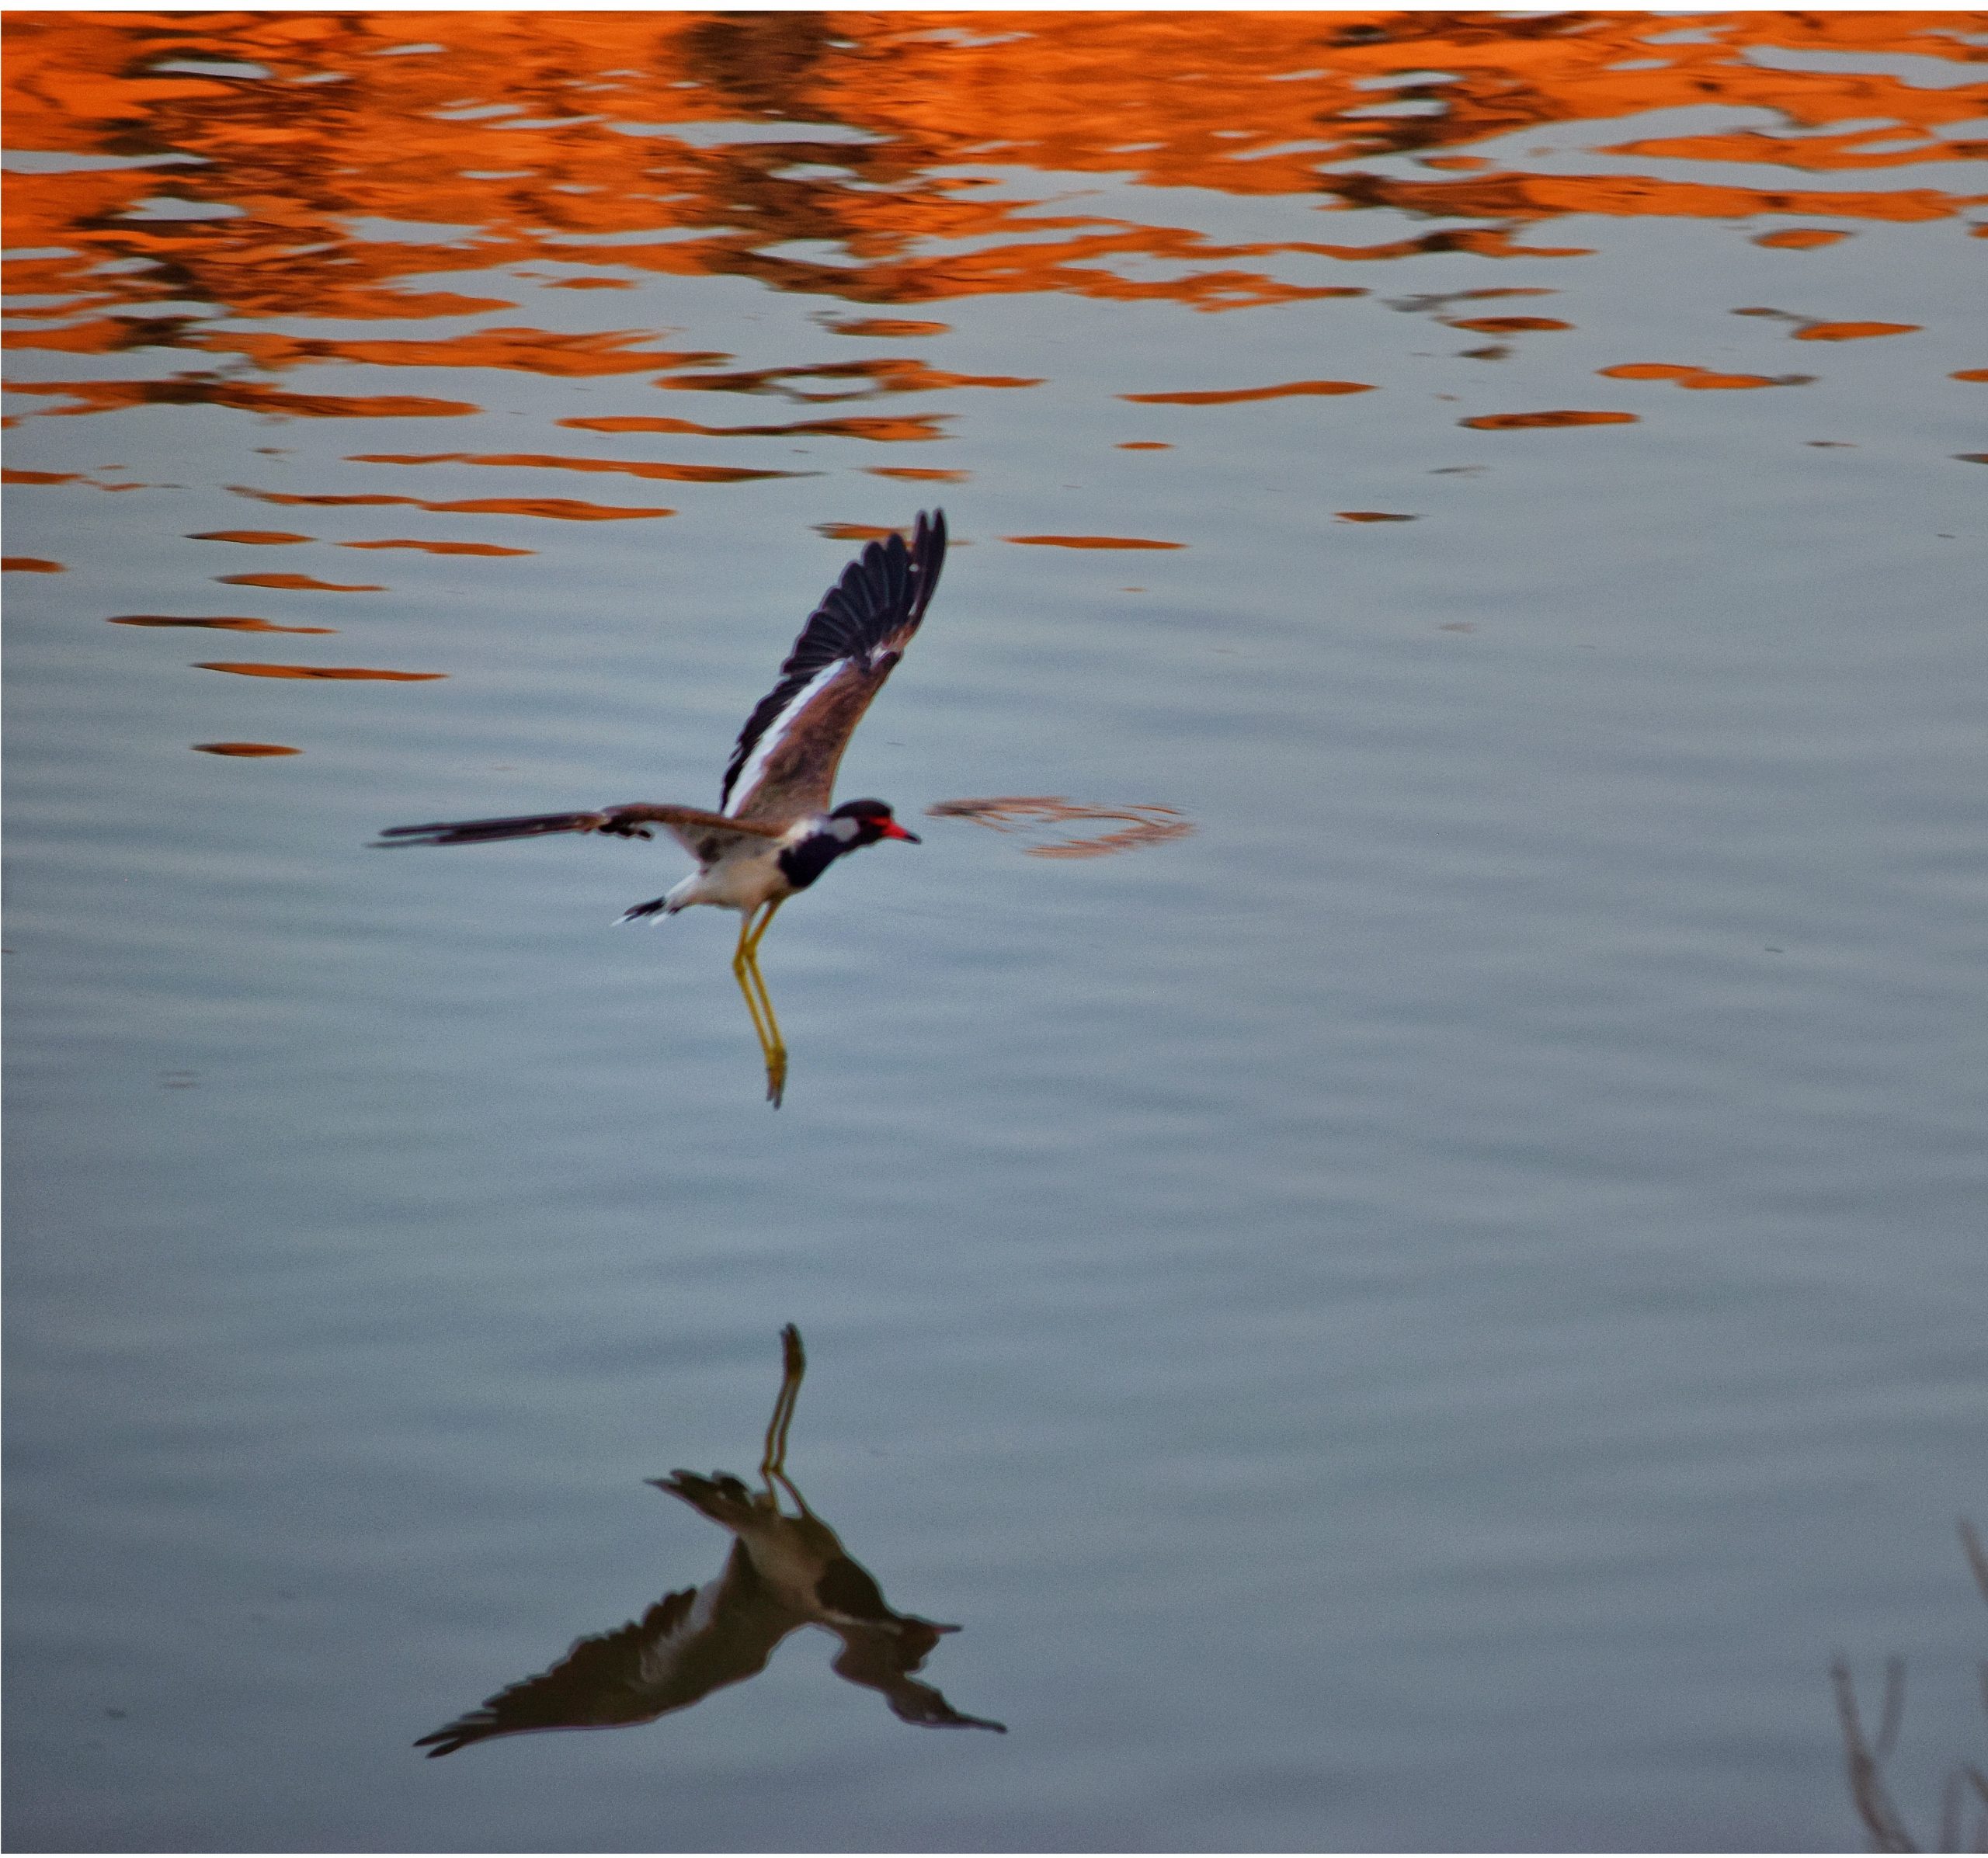 A coastal bird flying over a lake